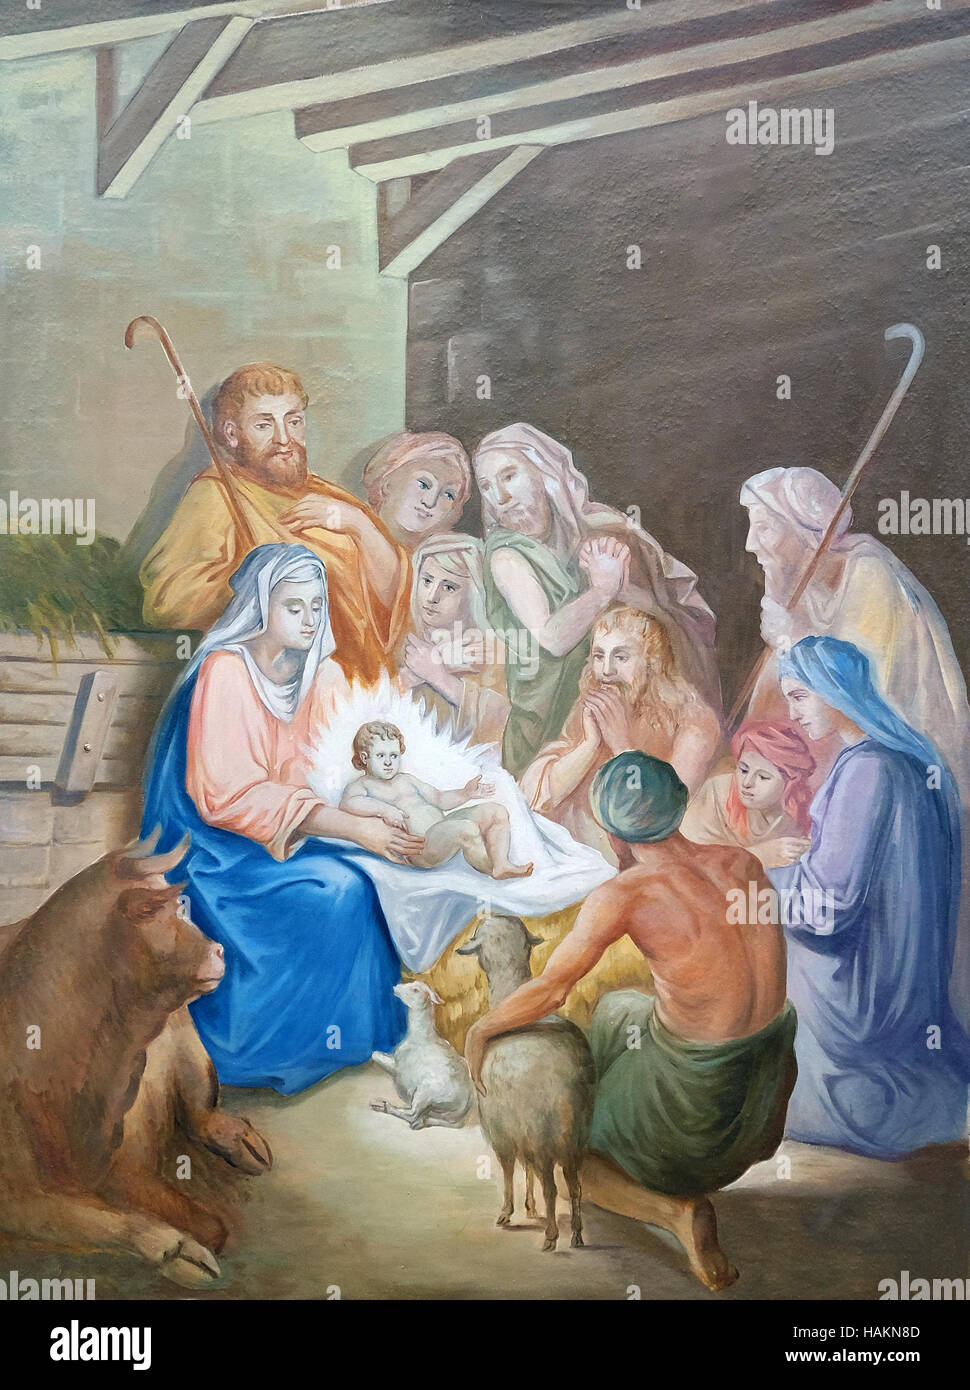 Nativity Scene, Adoration of the Shepherds fresco in parish church of the Holy Trinity in Krasic, Croatia Stock Photo